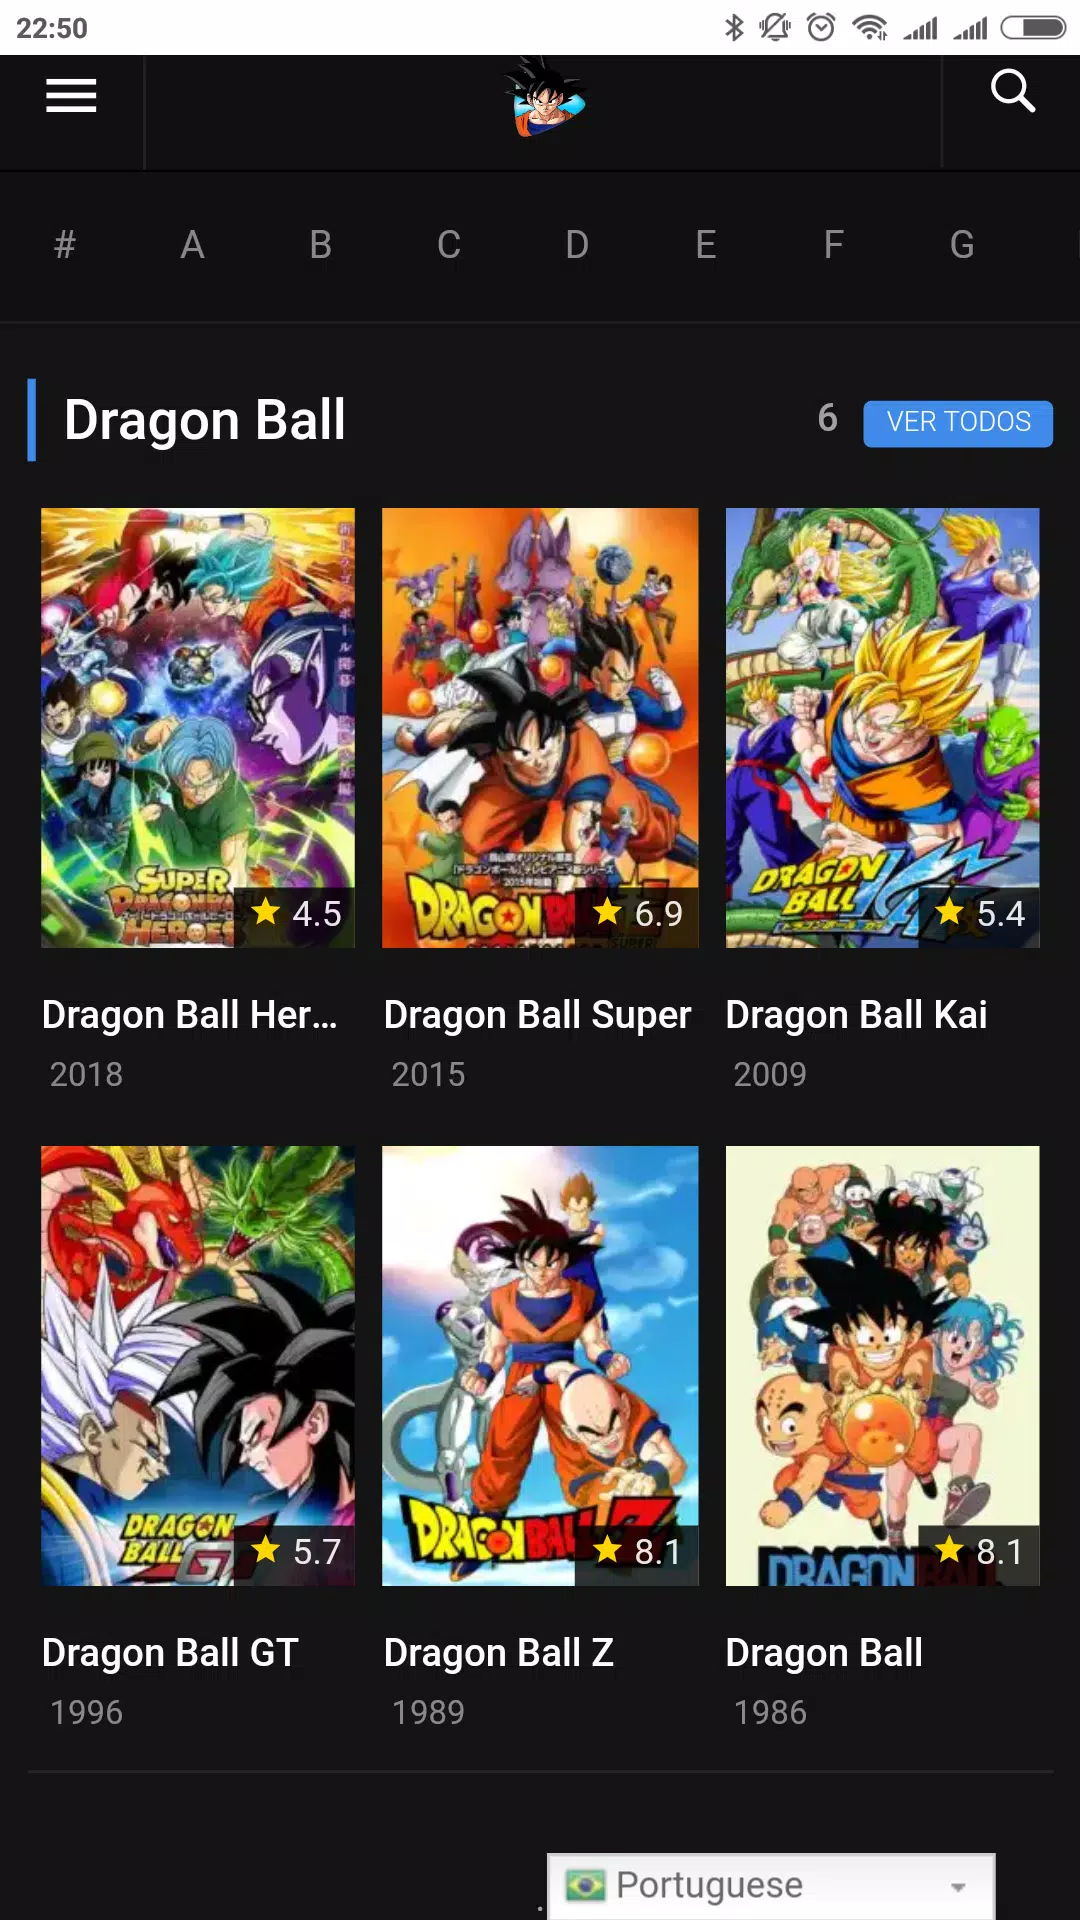 Assistir Dragon Ball - Vídeos Online for Android - APK Download